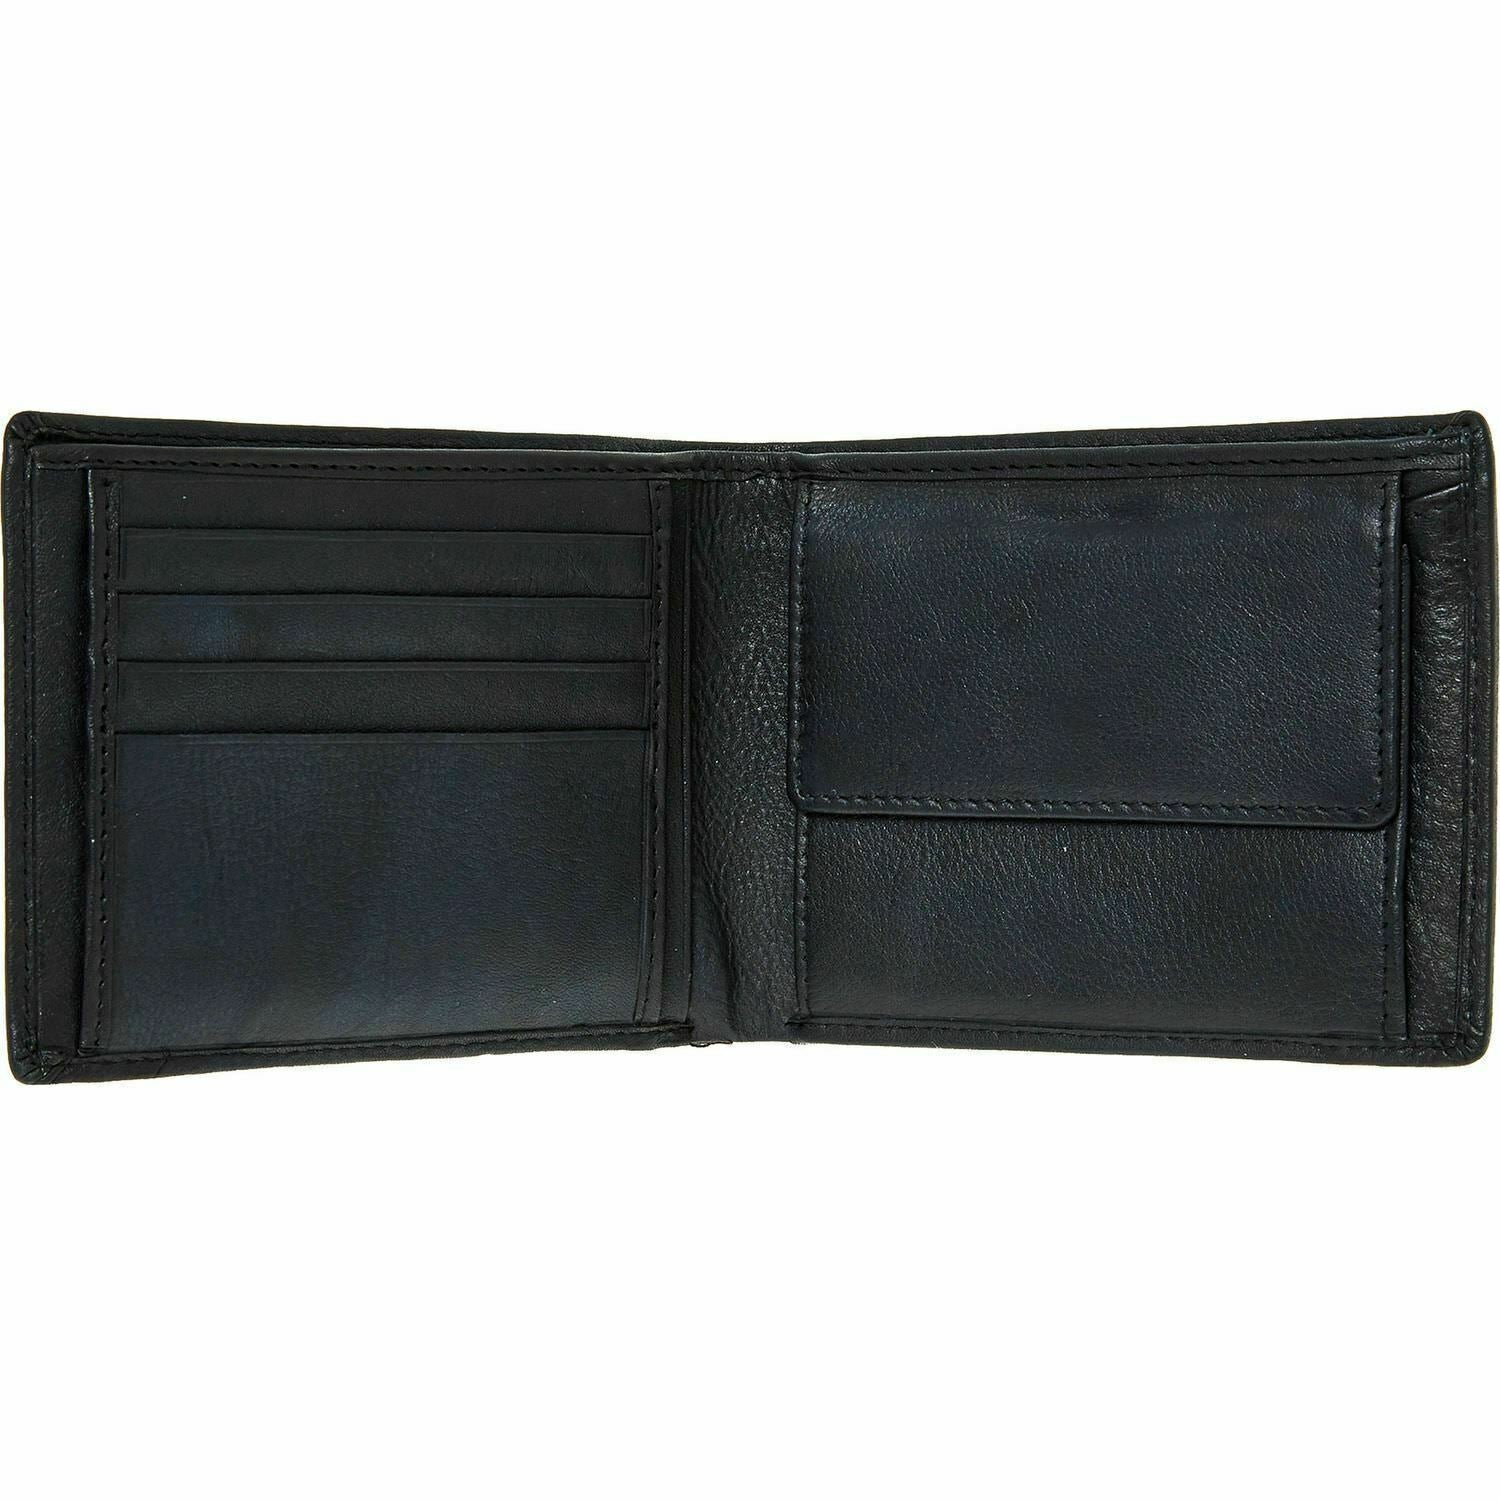 MAITRE Black Genuine Leather Bi-Fold Men's Wallet rrp Â£33